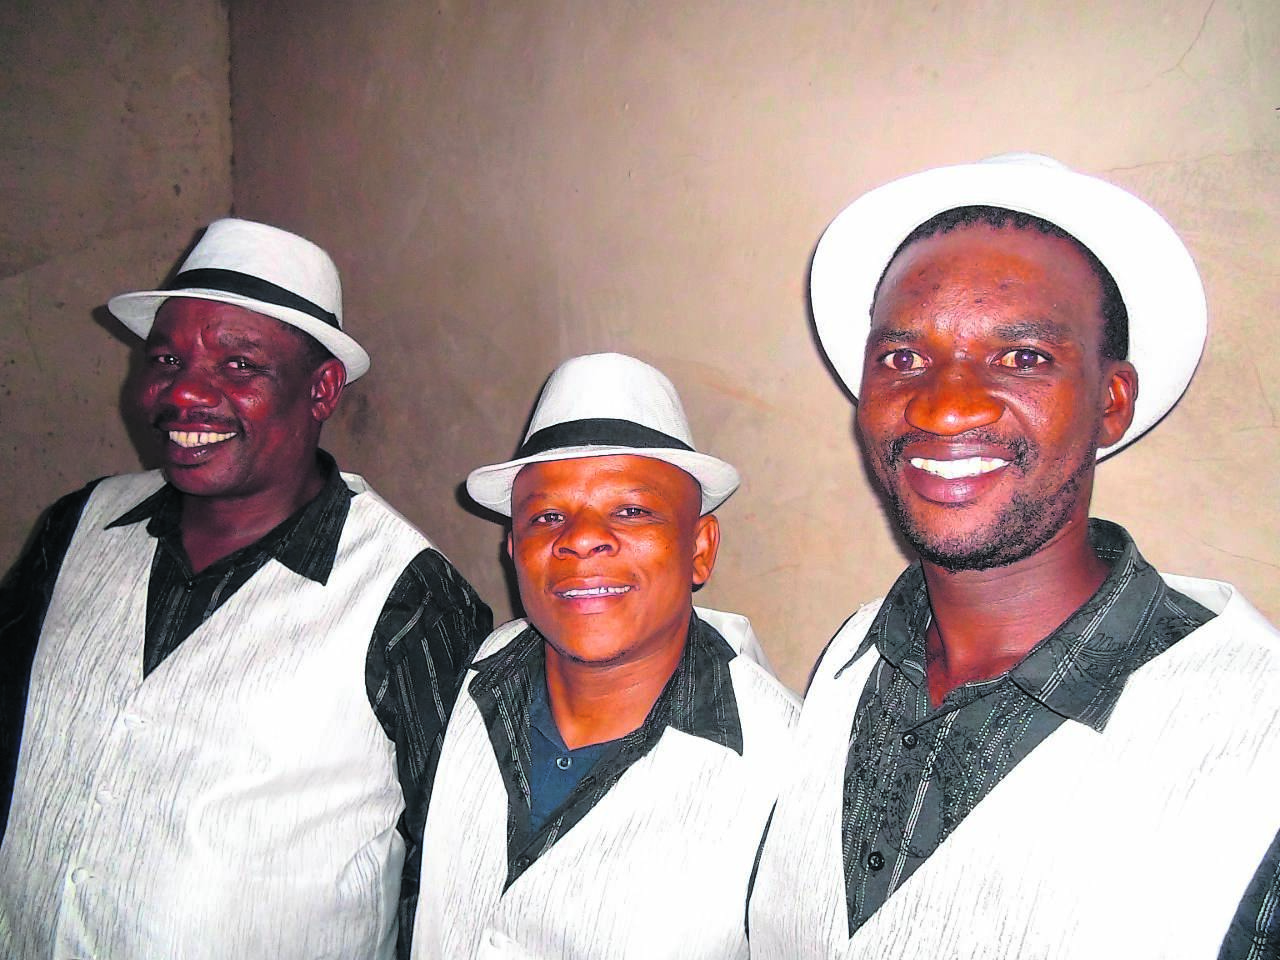 Mbaqanga group Ababekezeli is made up of Siphiwe Zakwe (middle) and his sons, Mbuso and Sandile.